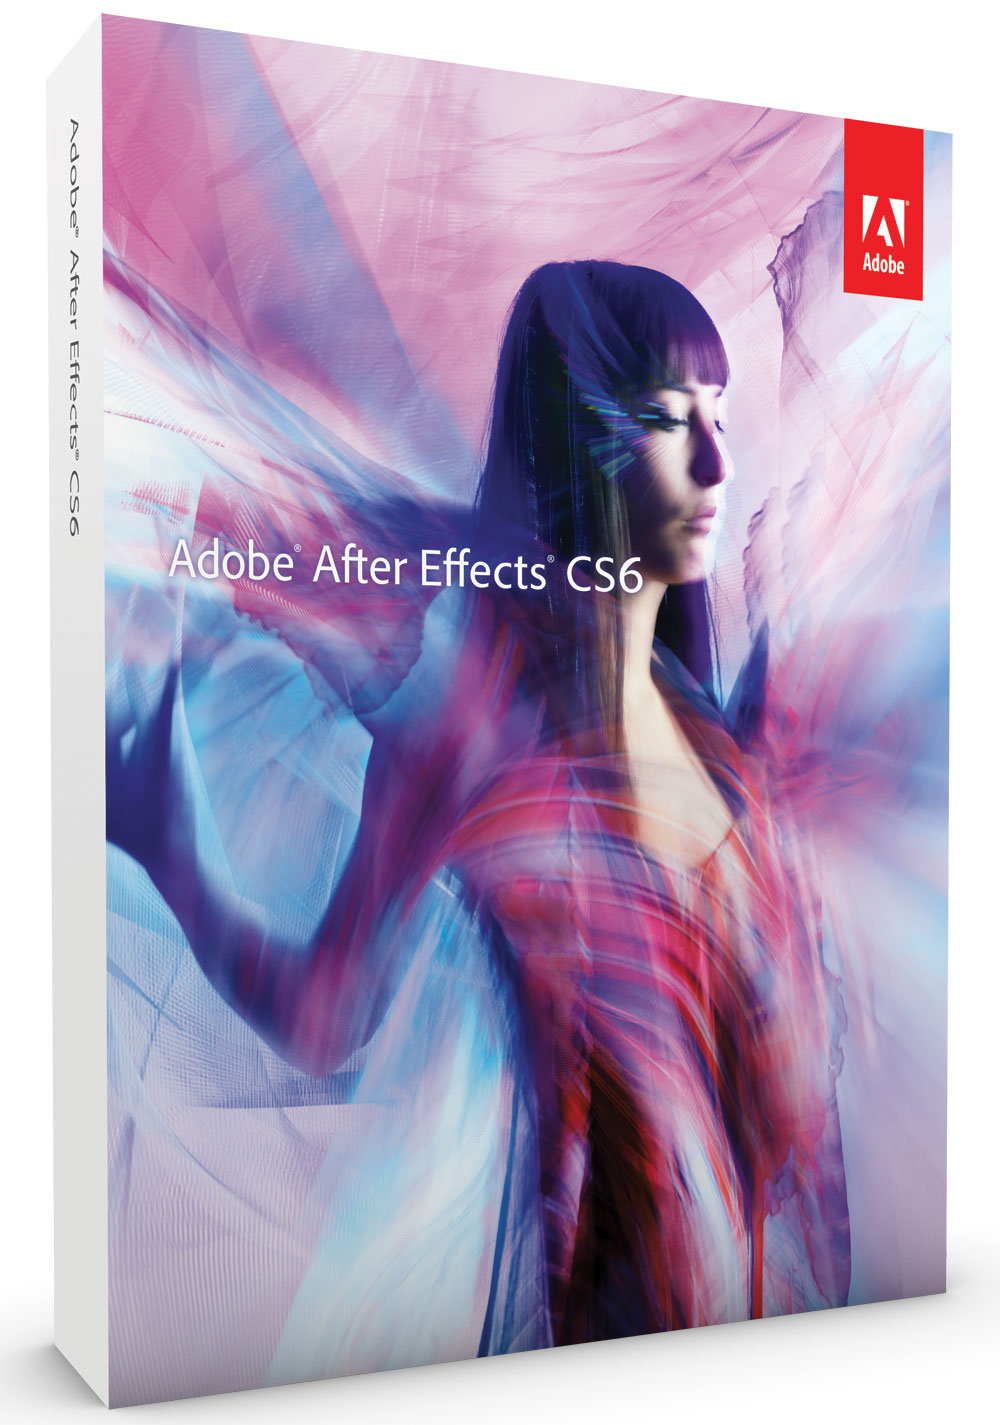 Adobe After Effects CS6 [PORTABLE] 64 bit ONLY โปรแกรมทำเอฟเฟคแบบอลังการงานสร้าง